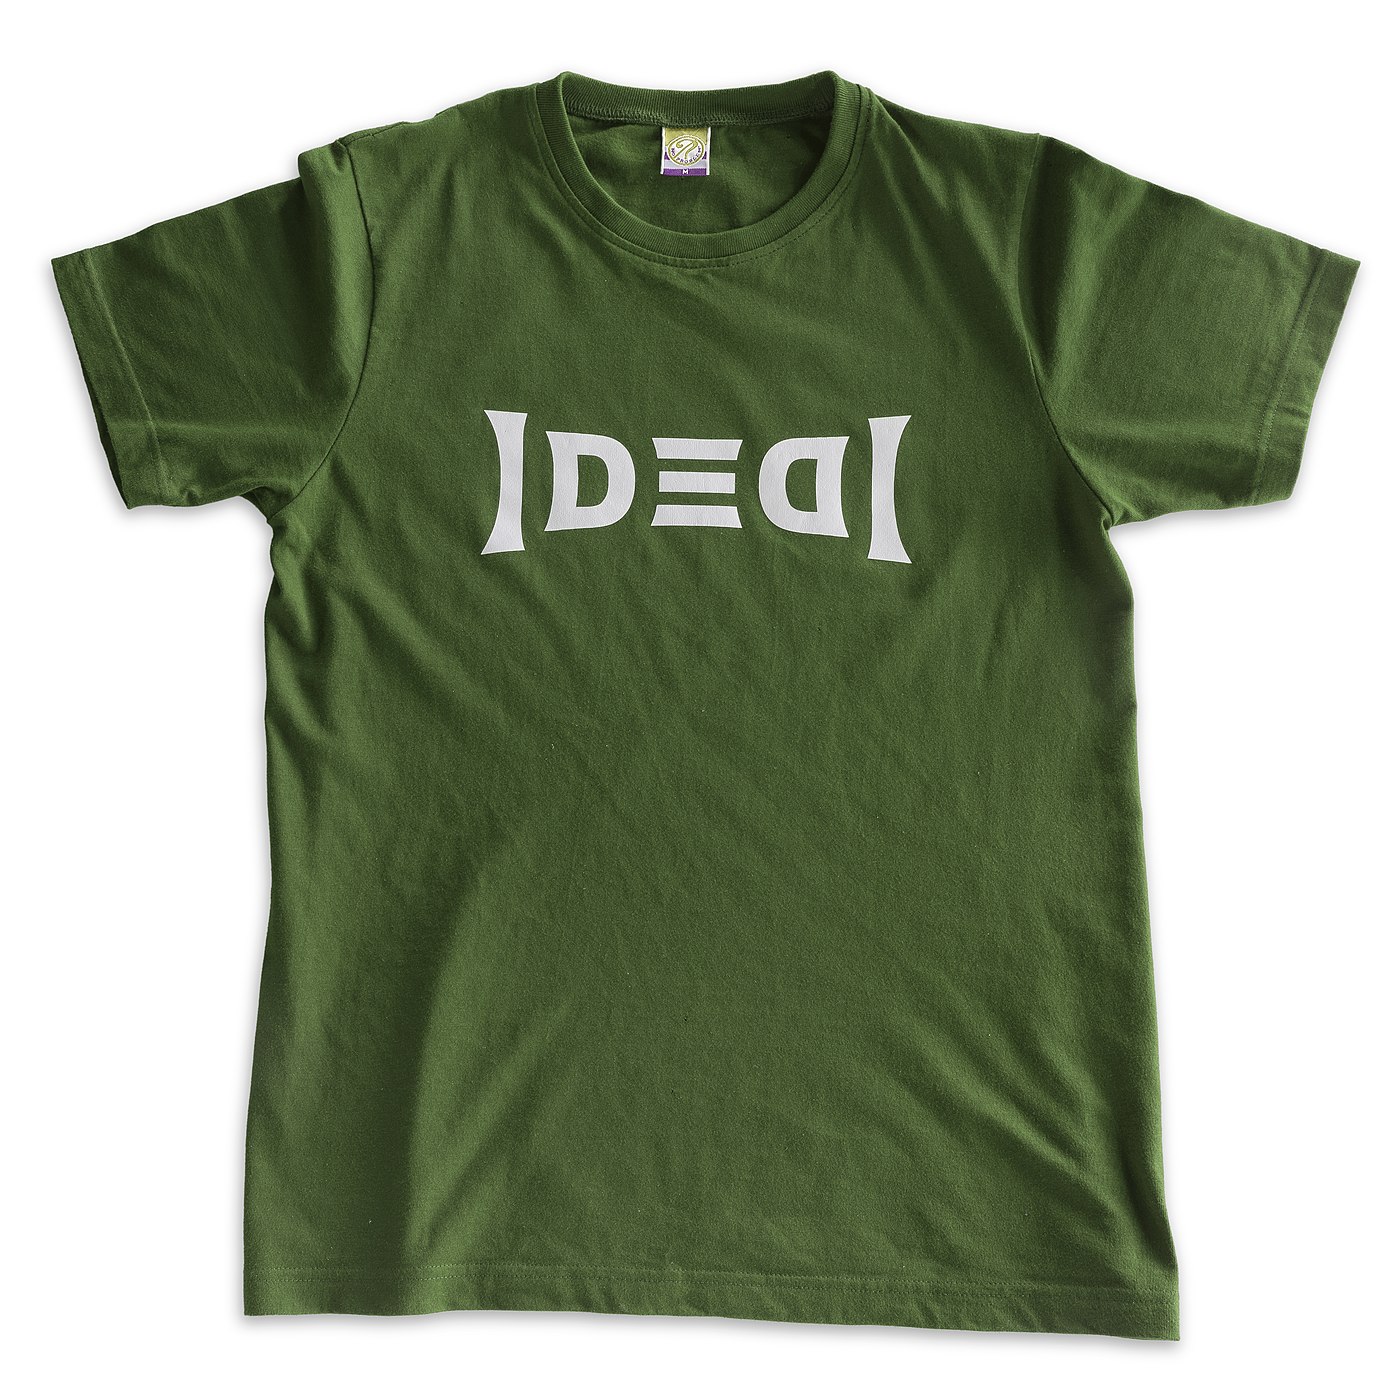 ambigram ideal print on shirt